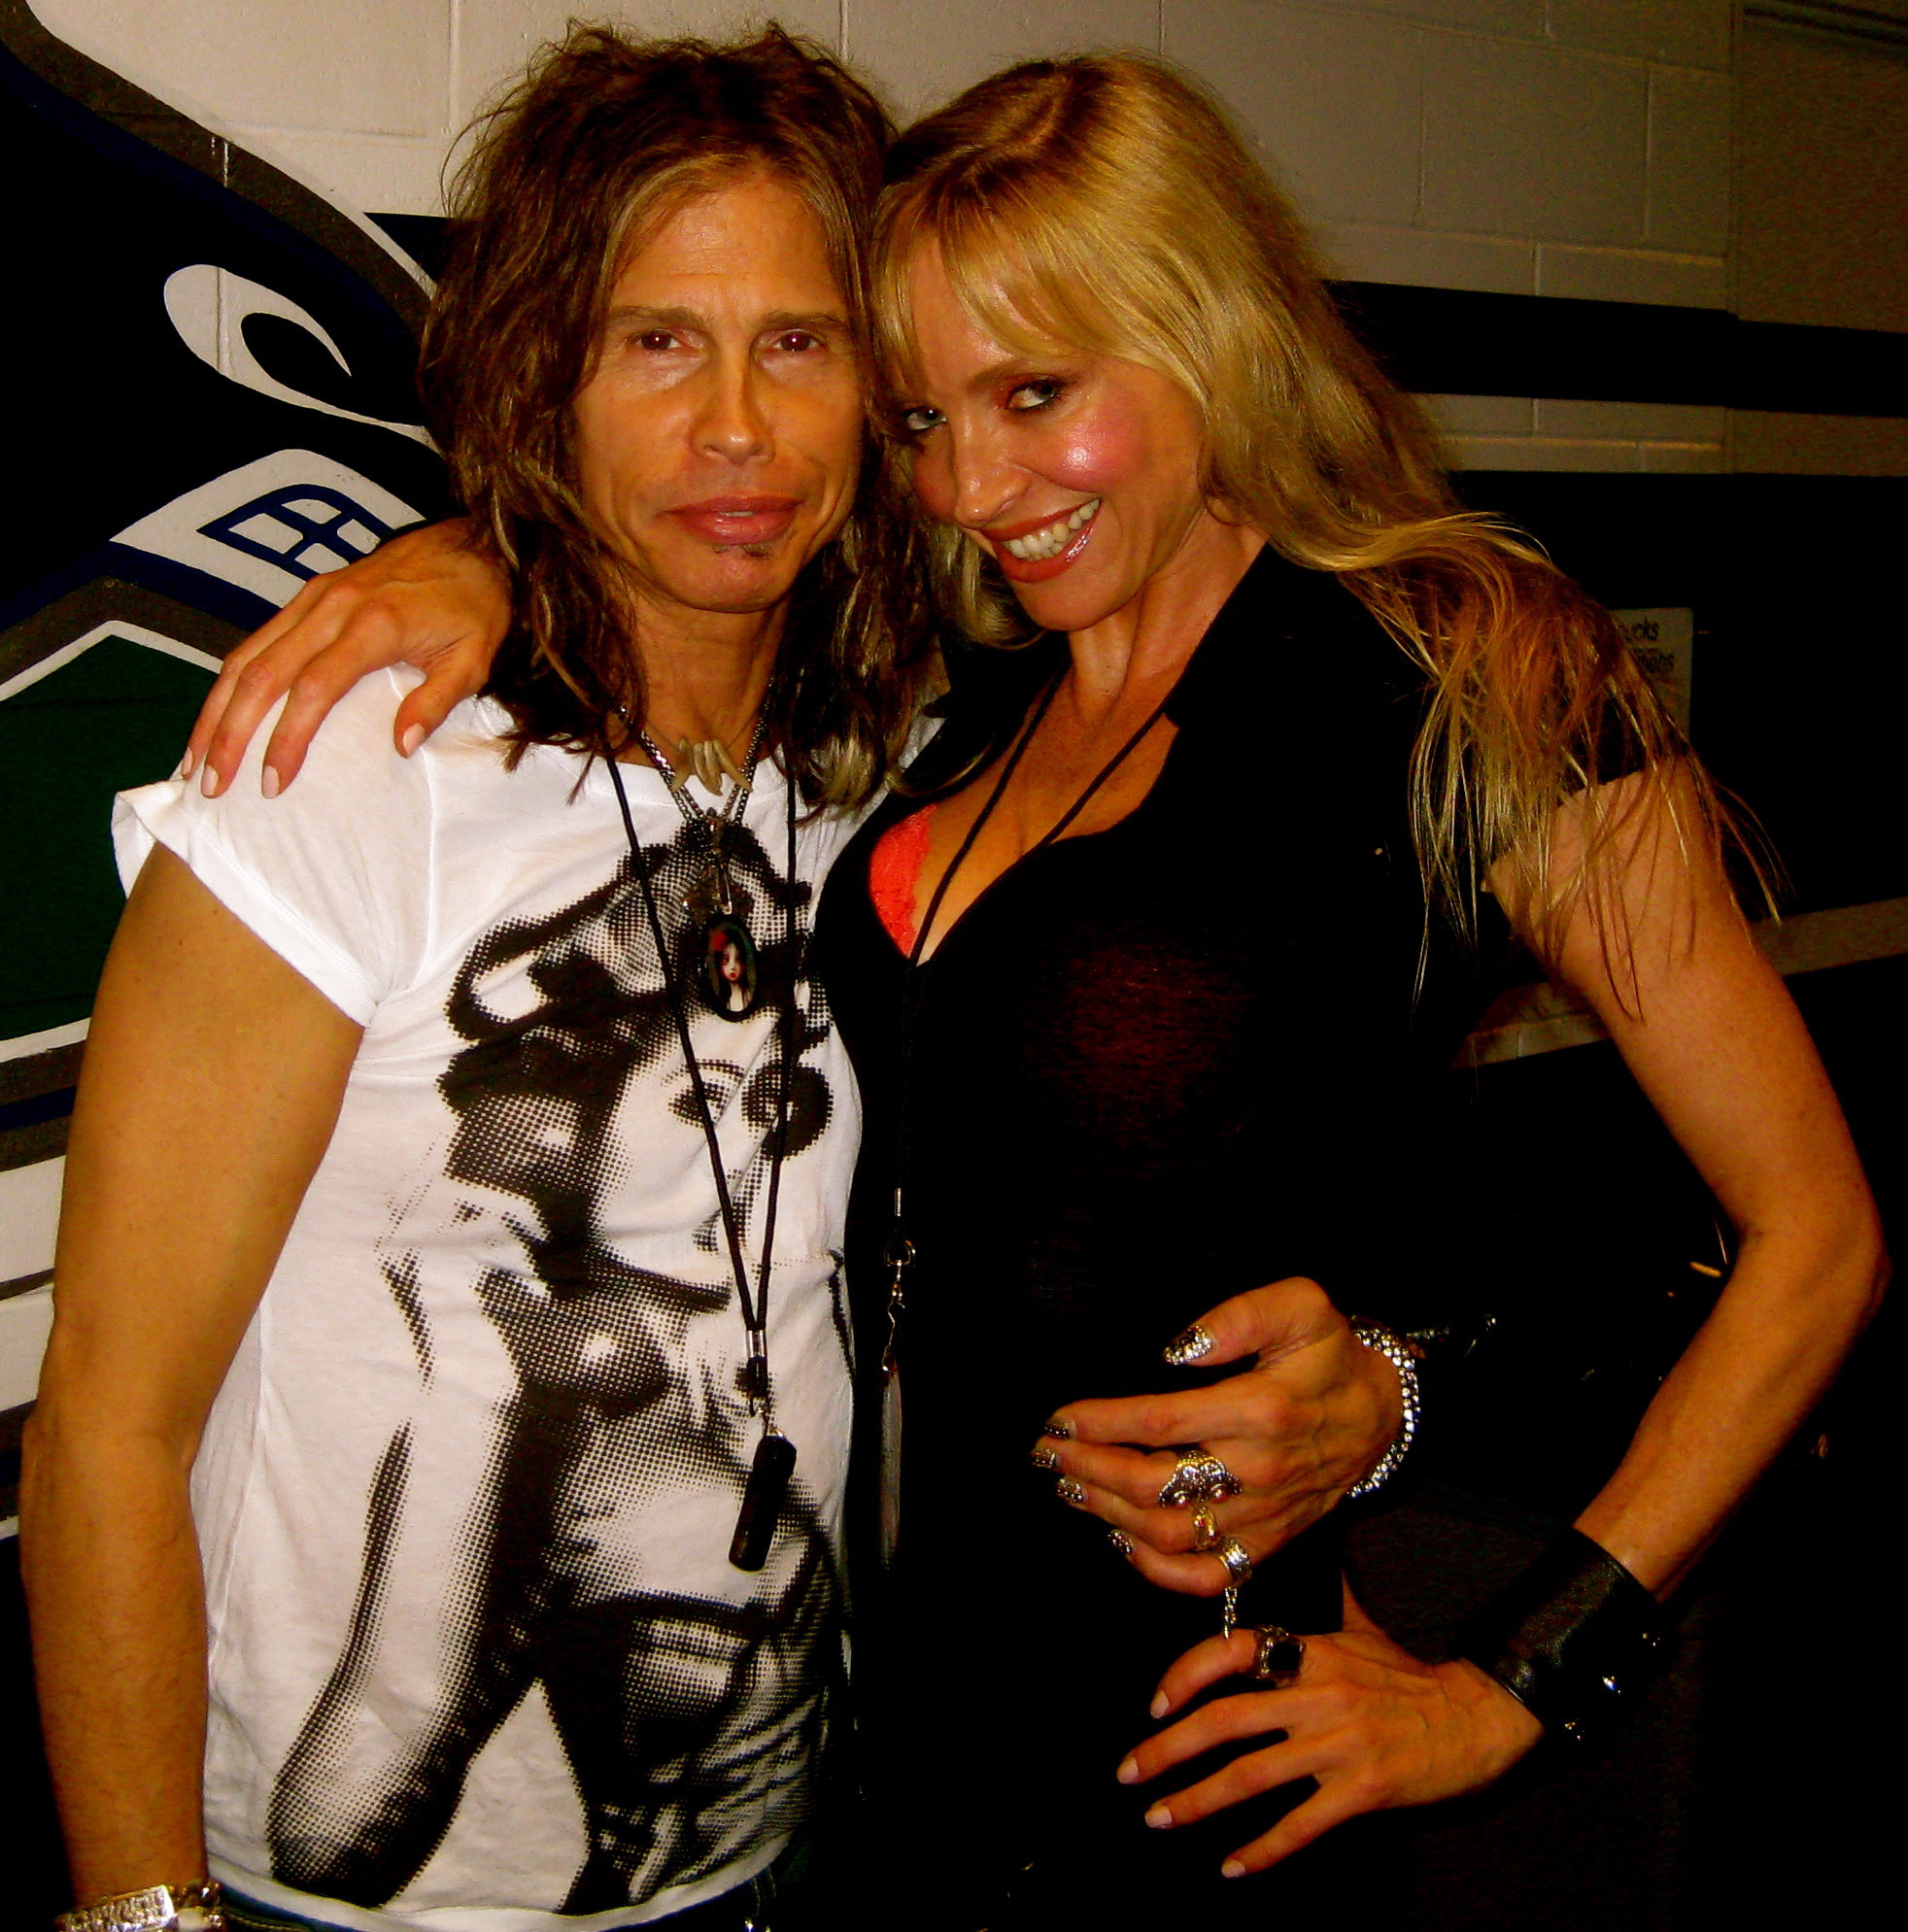 Steven Tyler(Aerosmith/American Idol) & Karen Campbell (MTV VJ) backstage @ American Idol.